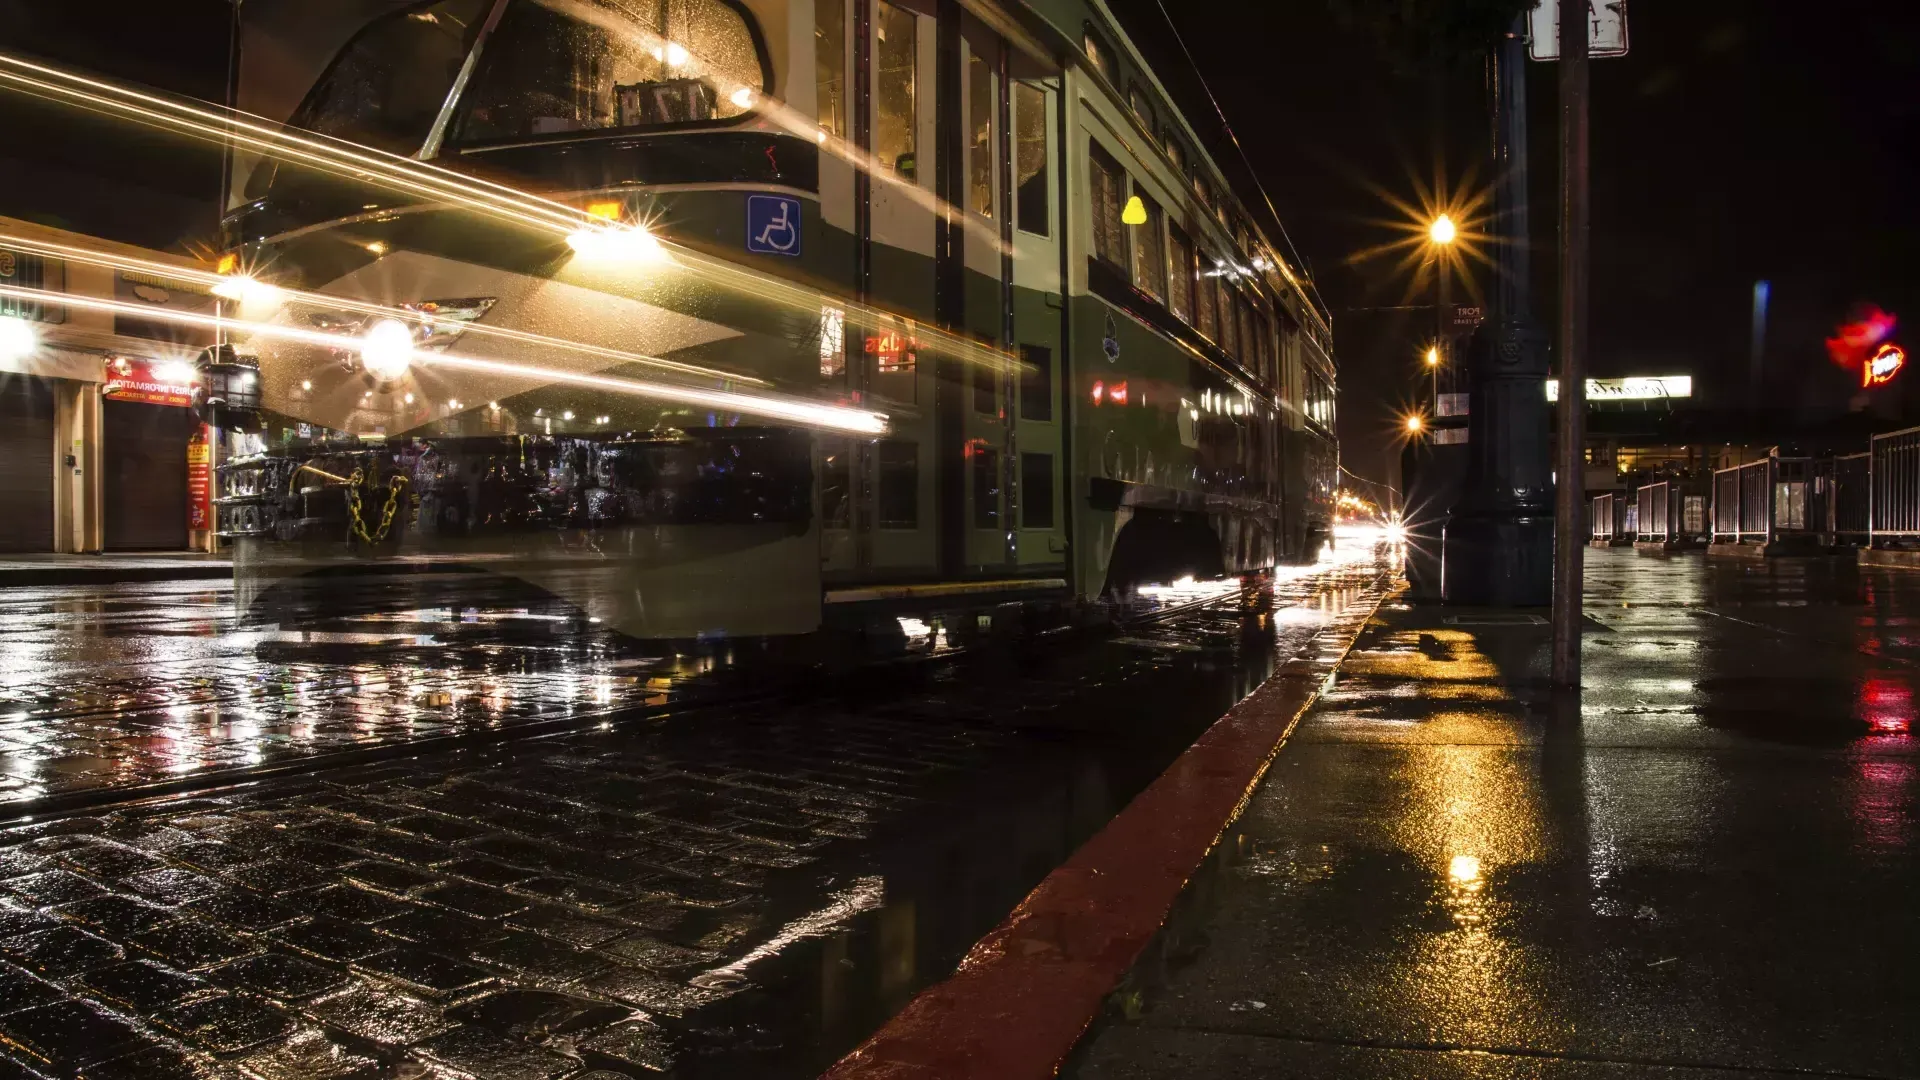 Streetcar at night in the rain